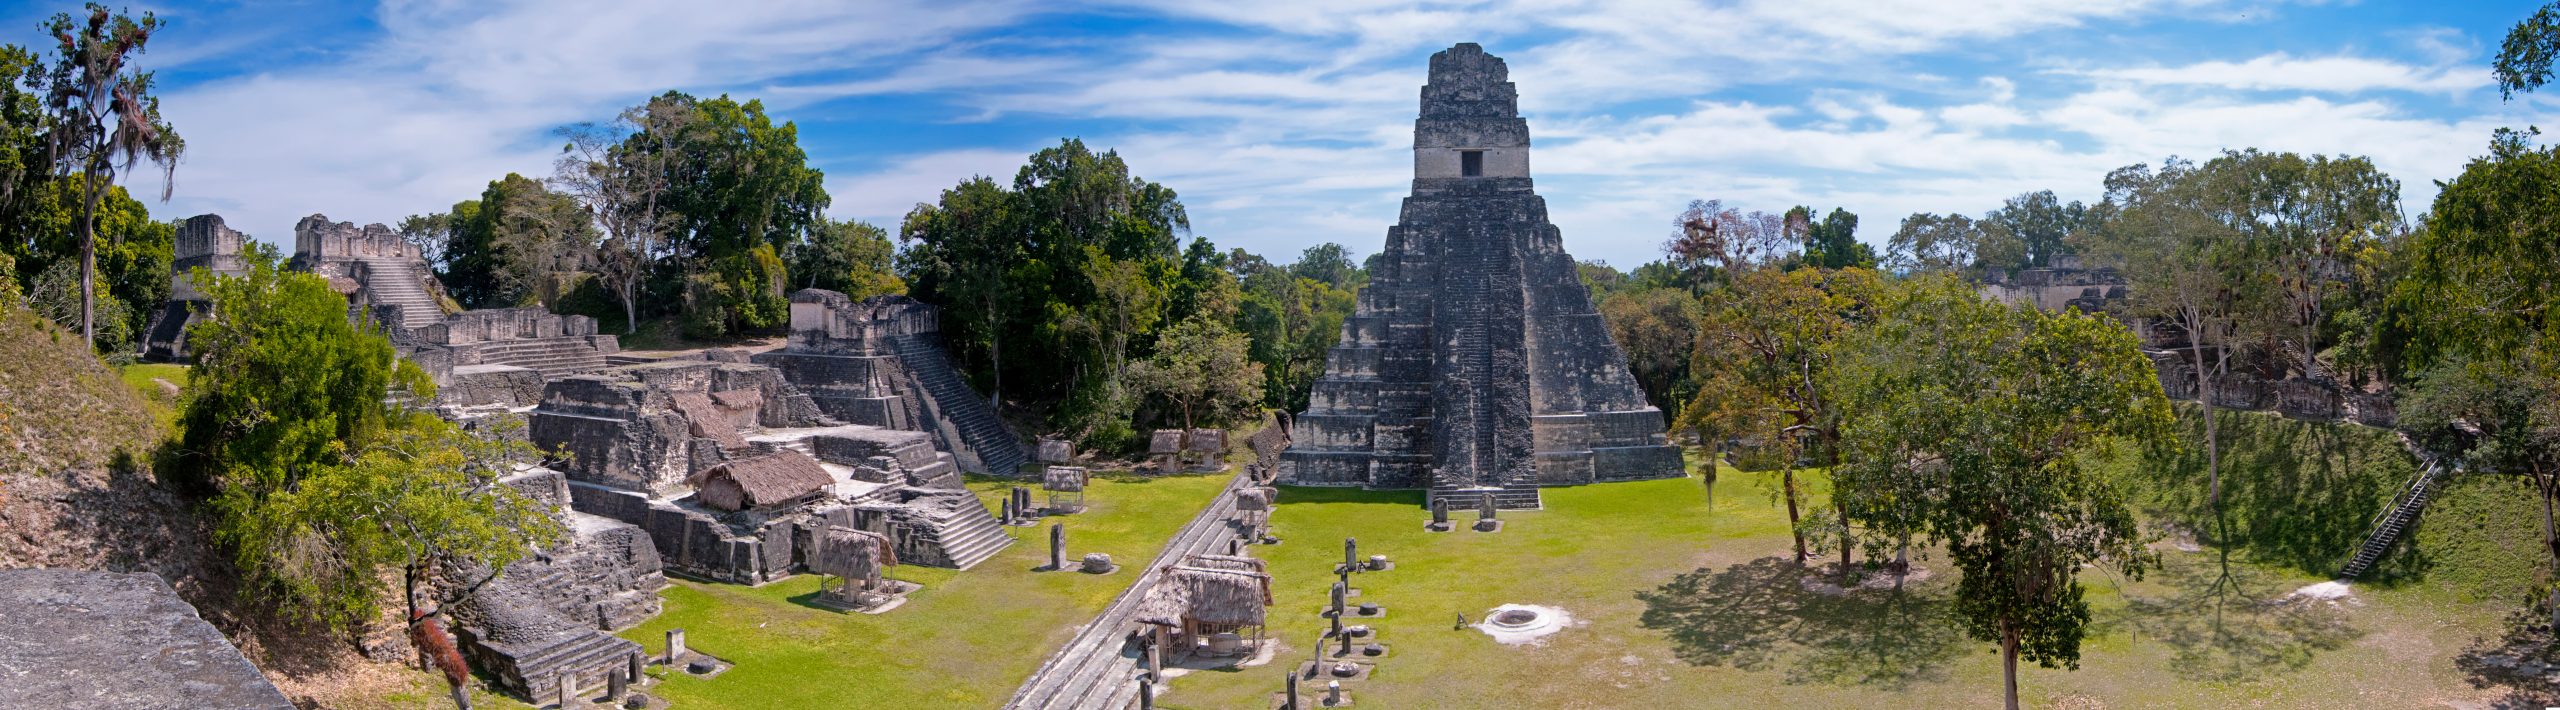 Panoramic image of the the Mayan ruins of Tikal in Guatemala